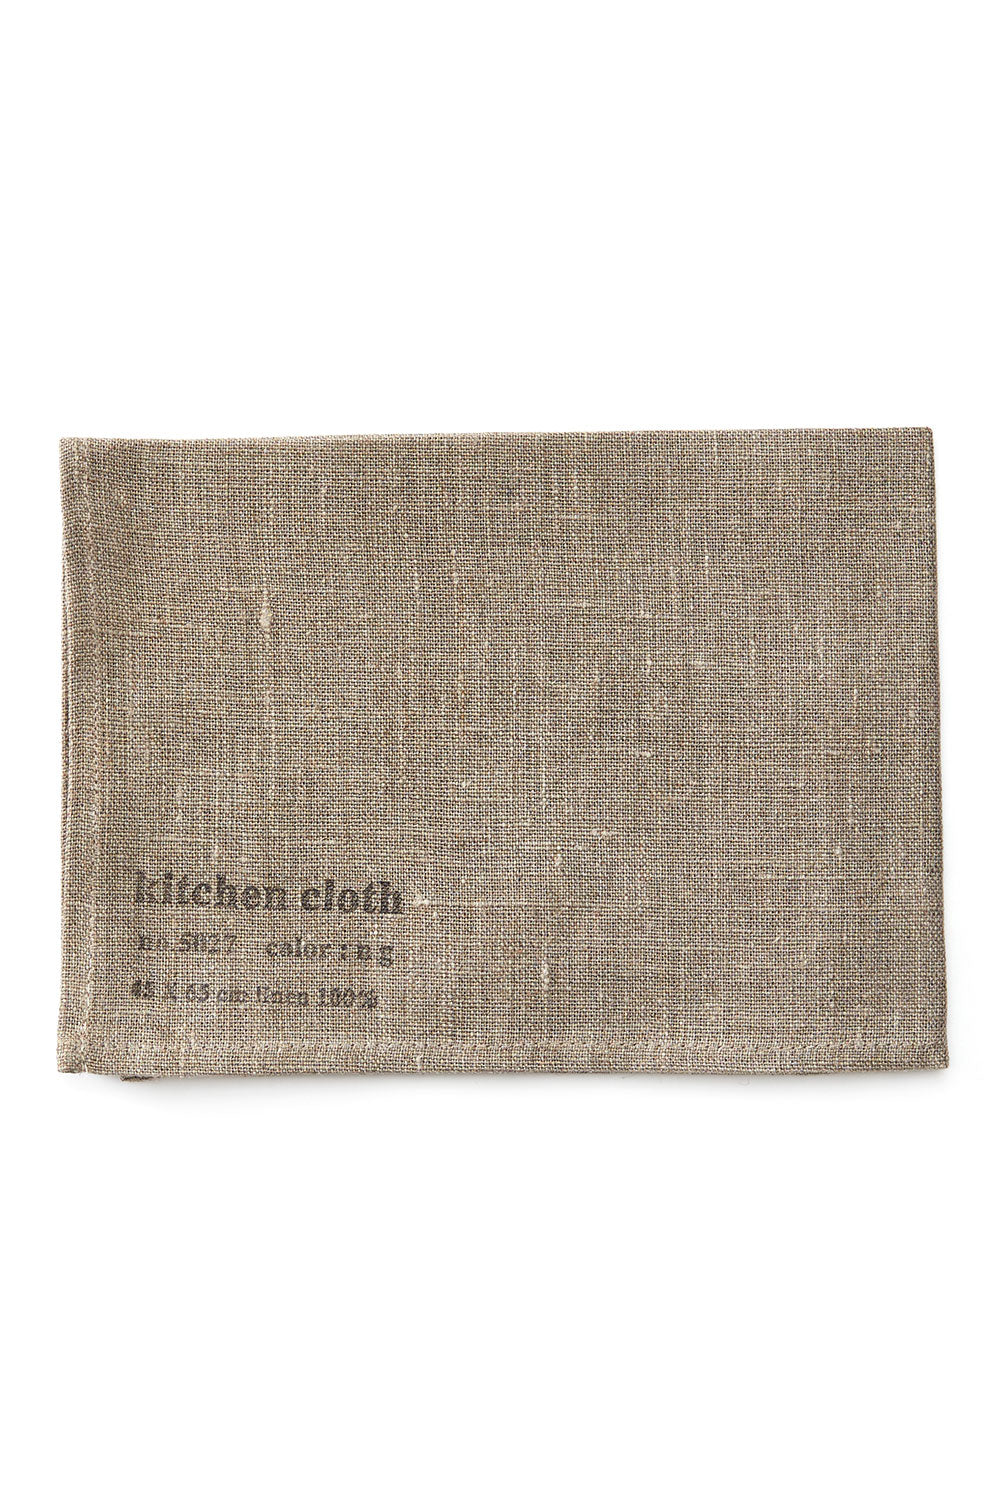 fog linen work kitchen cloth natural